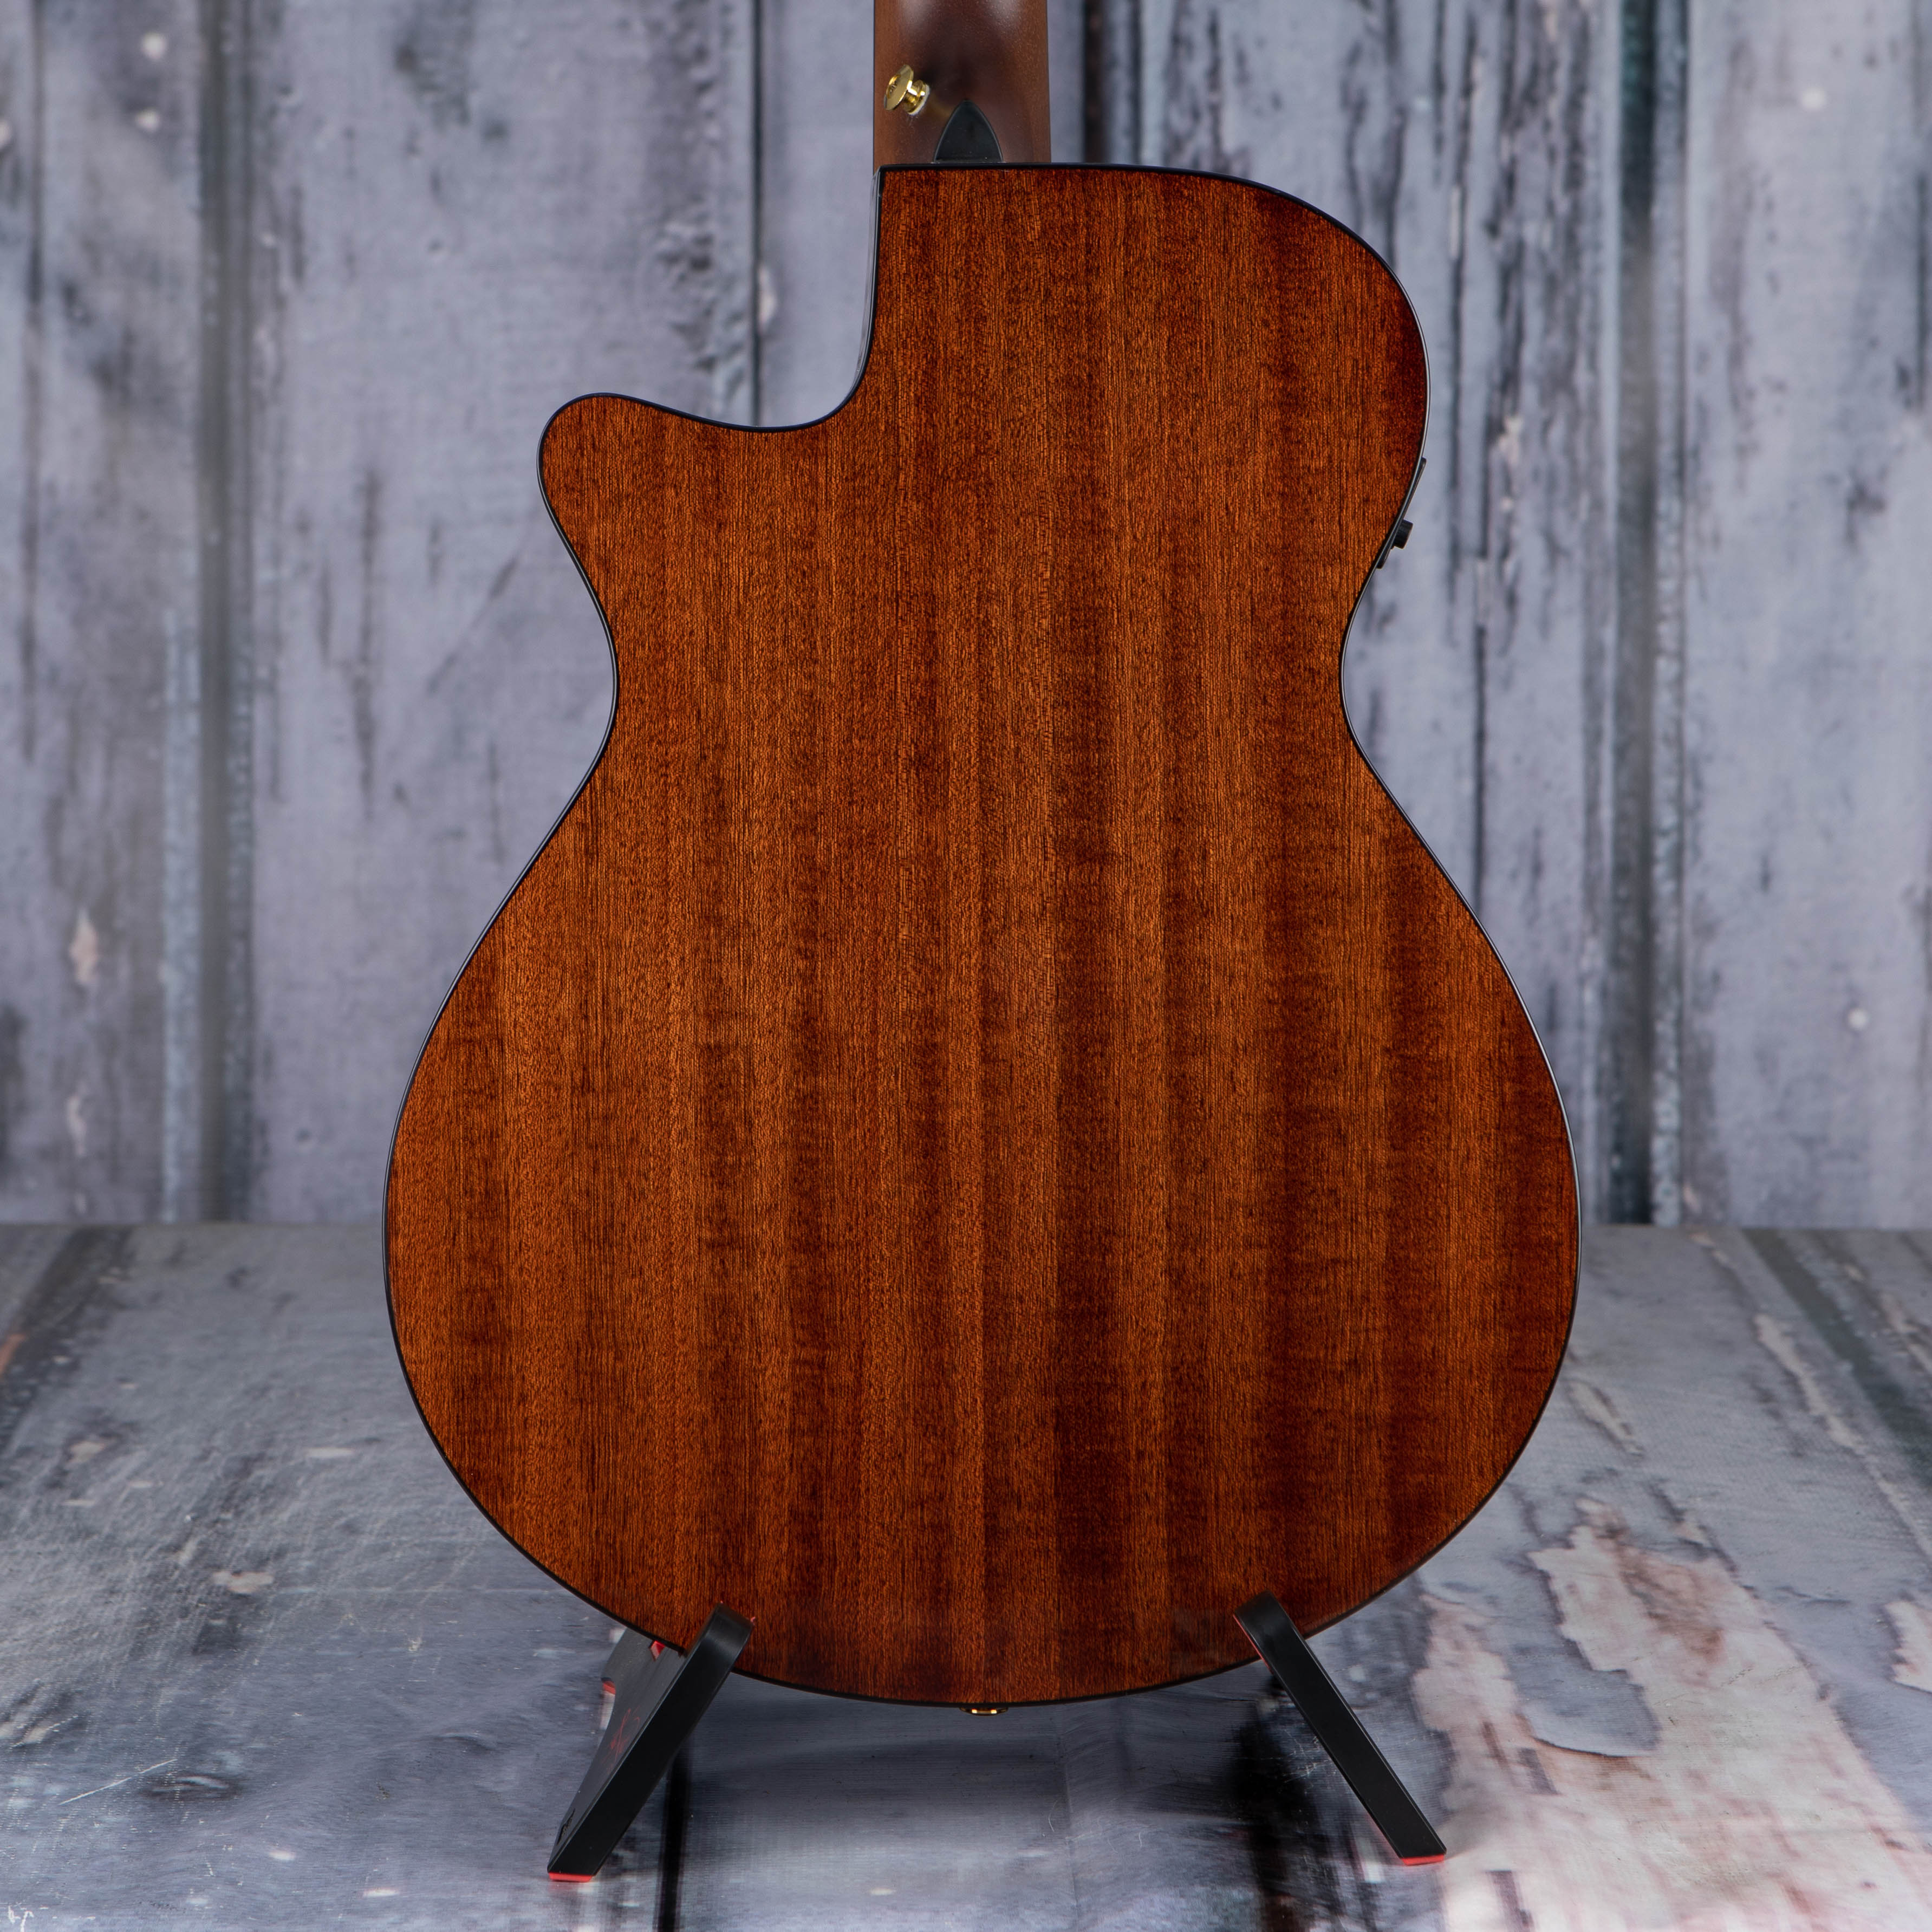 Ibanez AEG50N Classical Acoustic/Electric Guitar, Black High Gloss, back closeup